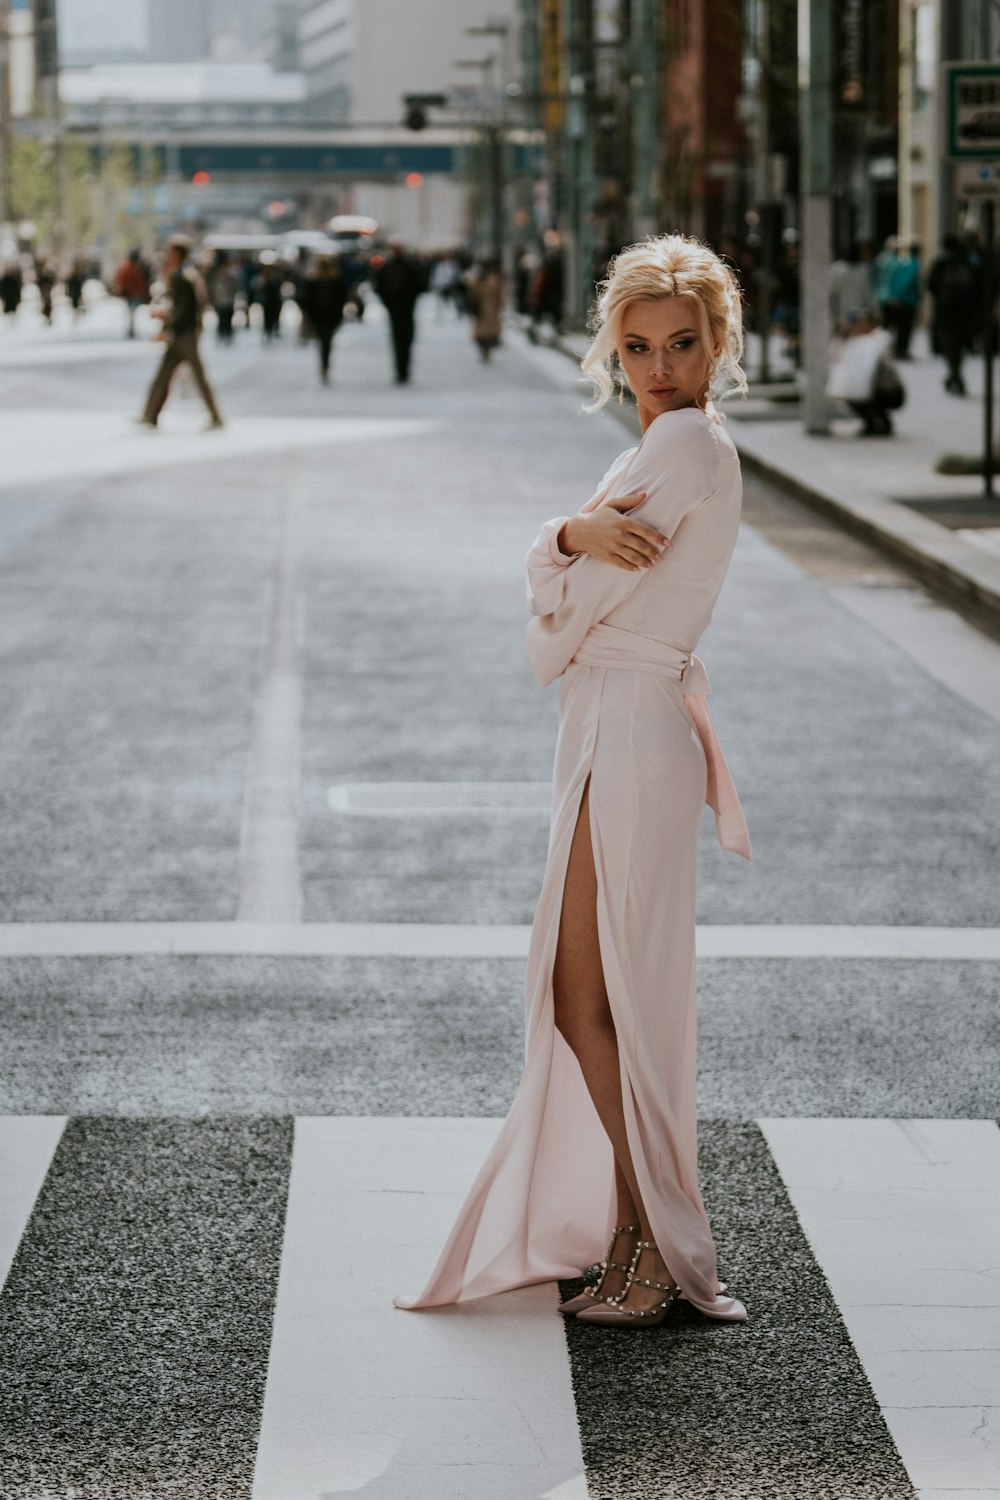 a woman in a pink dress standing on a cross walk